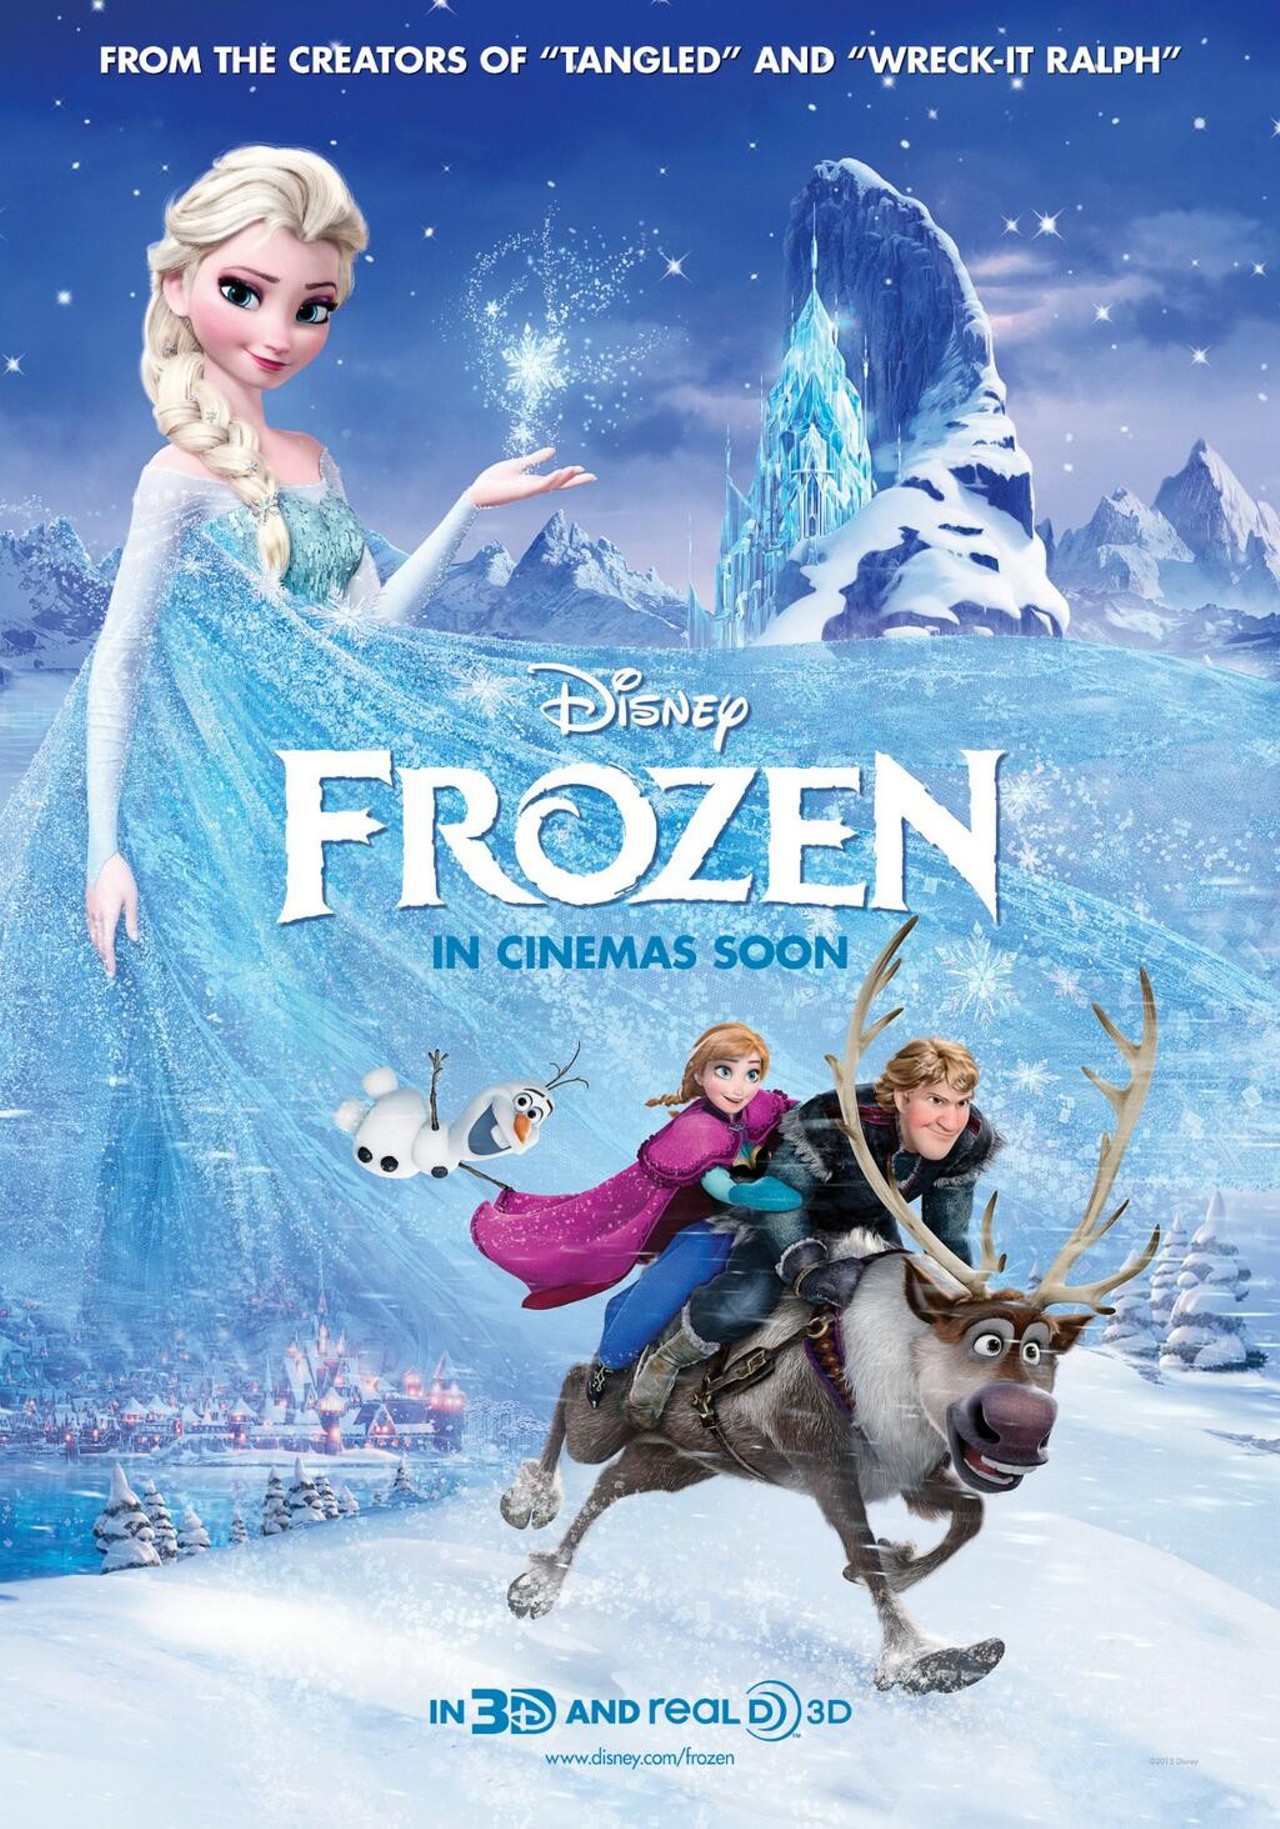 http://images3.wikia.nocookie.net/__cb20131002122860/disney/images/5/58/Frozen-movie-poster.jpg